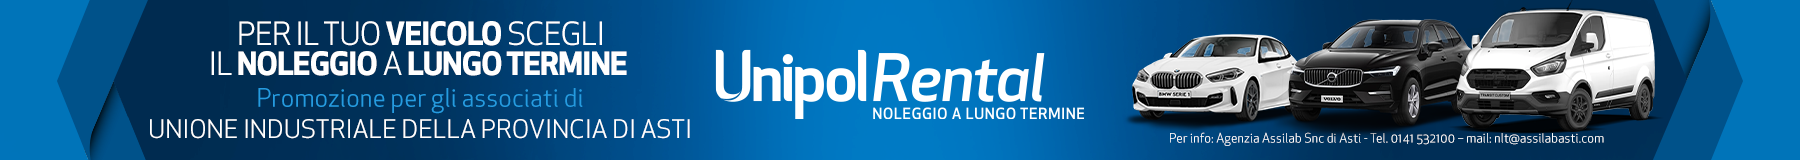 banner Unipol Rental